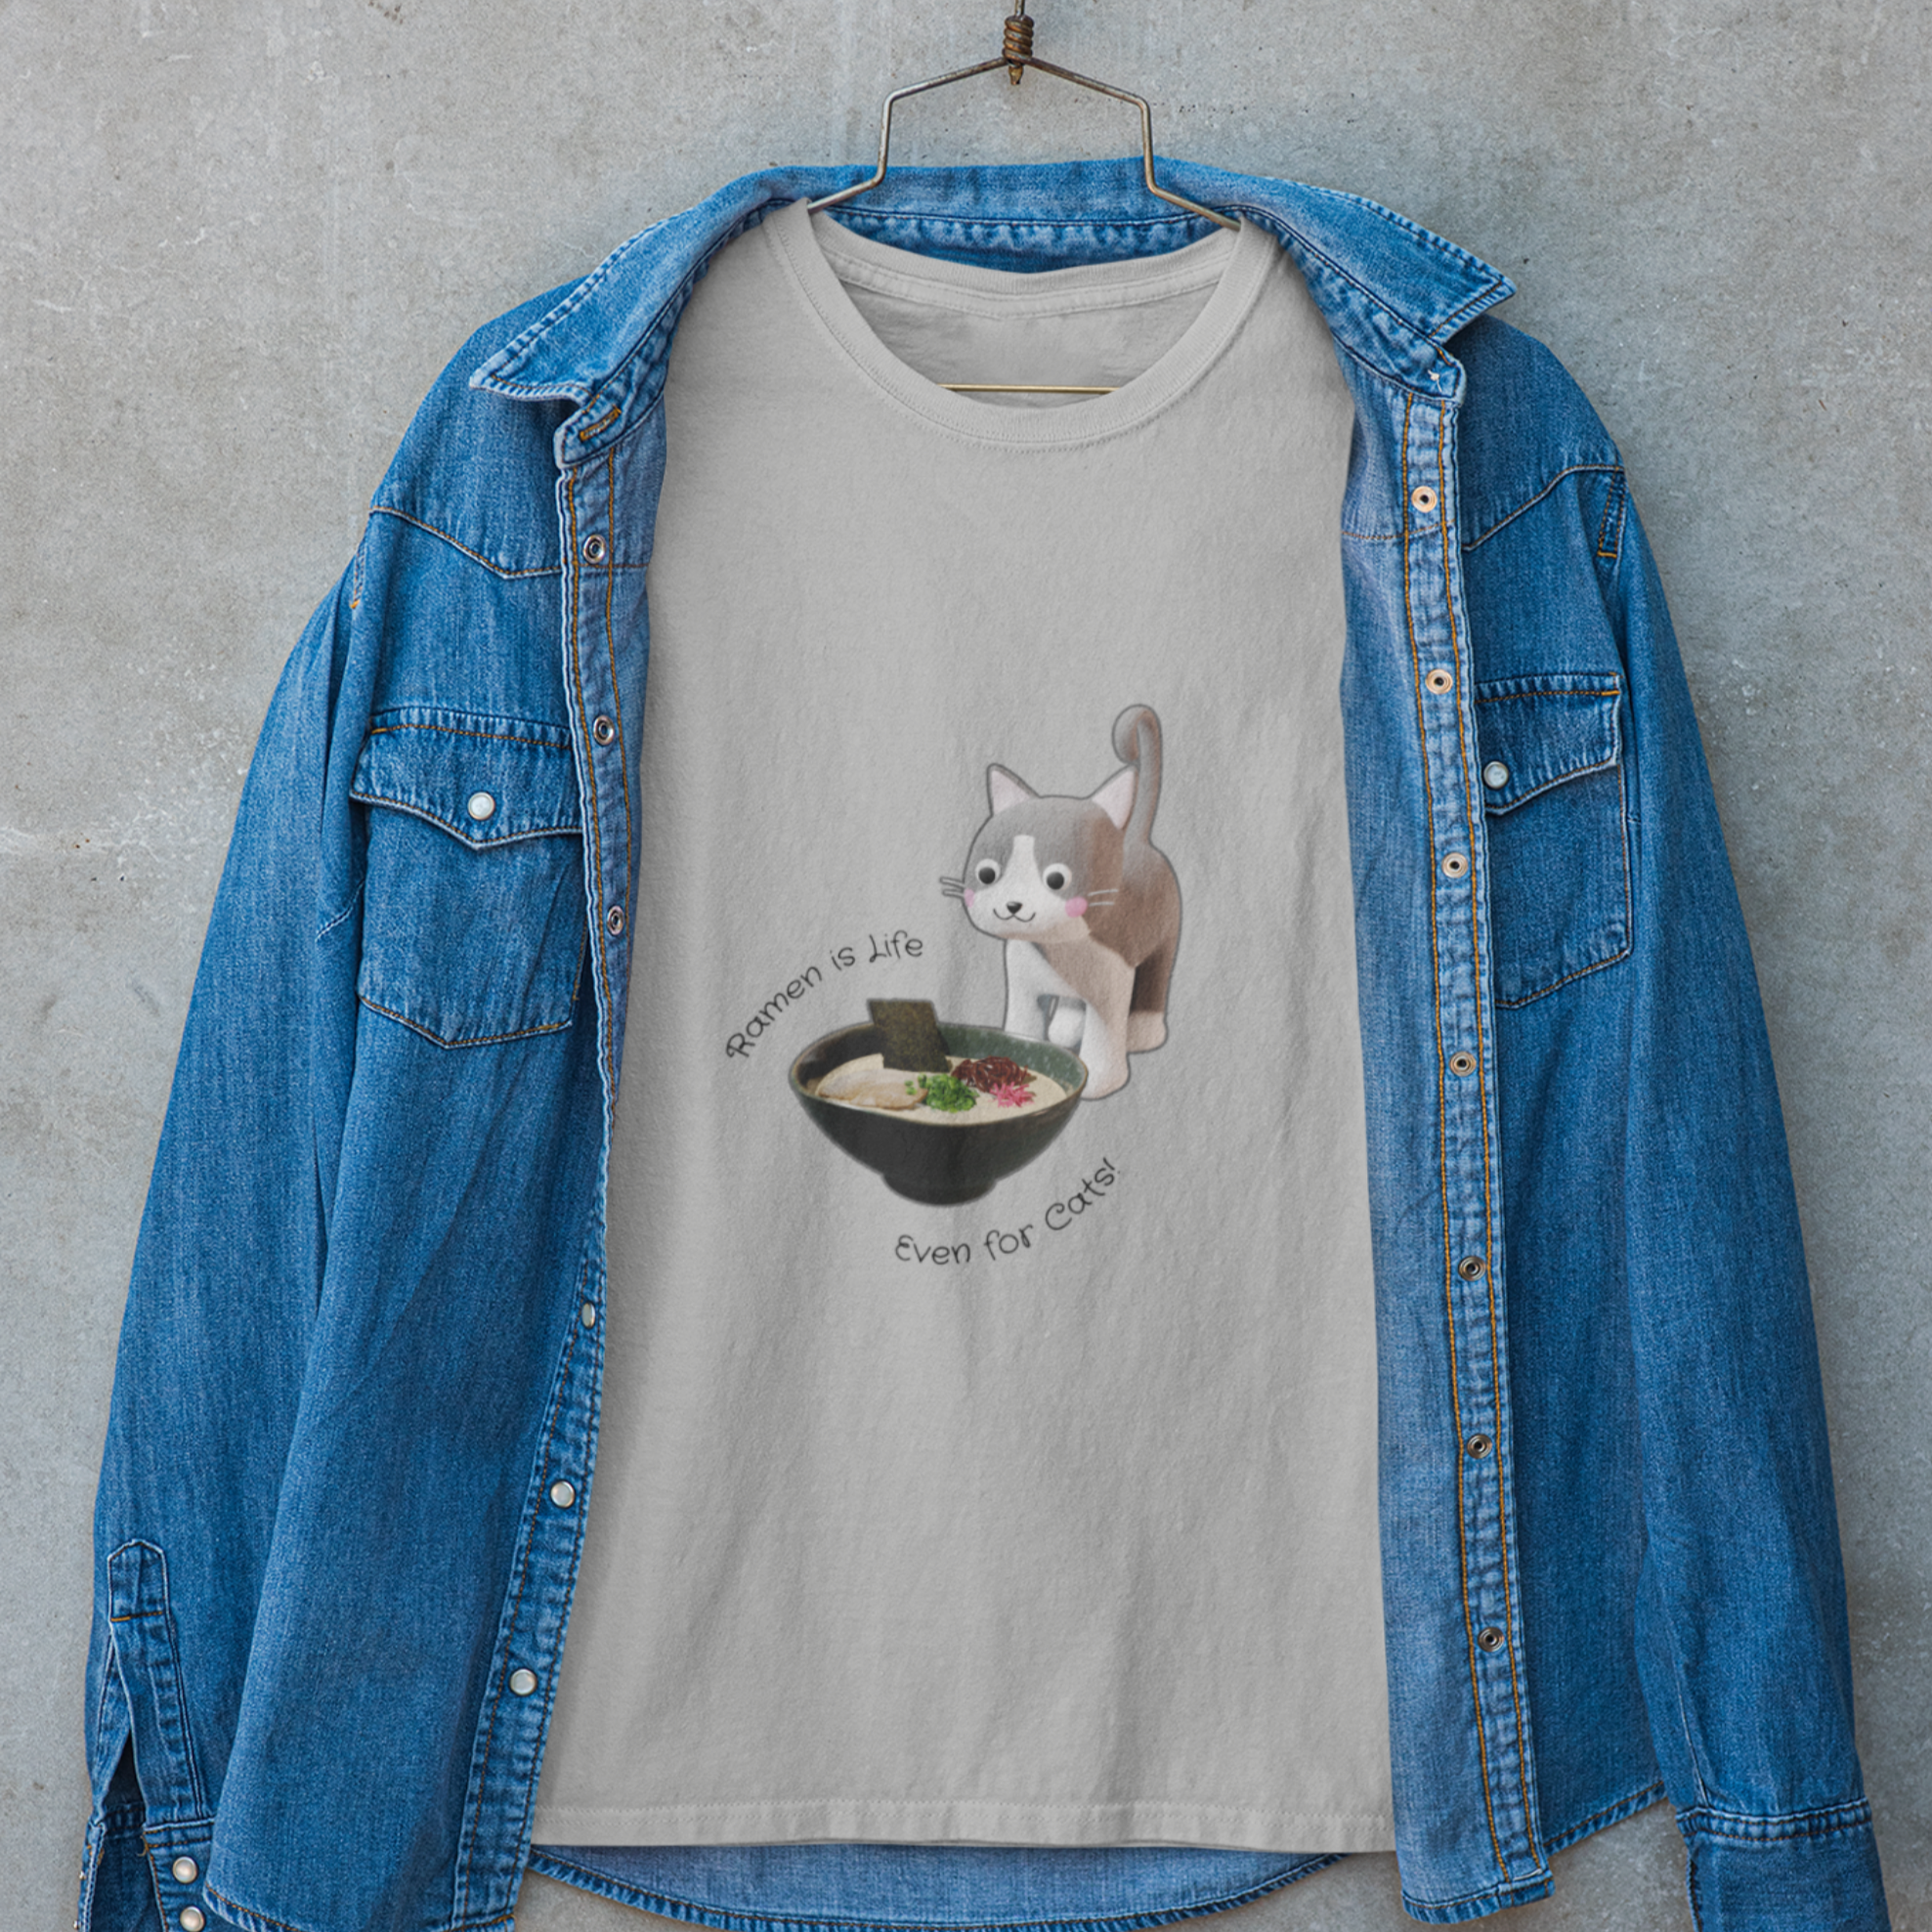 Ramen is Life Even for Cats T-shirt: Japanese Foodie Shirt with Ramen Art